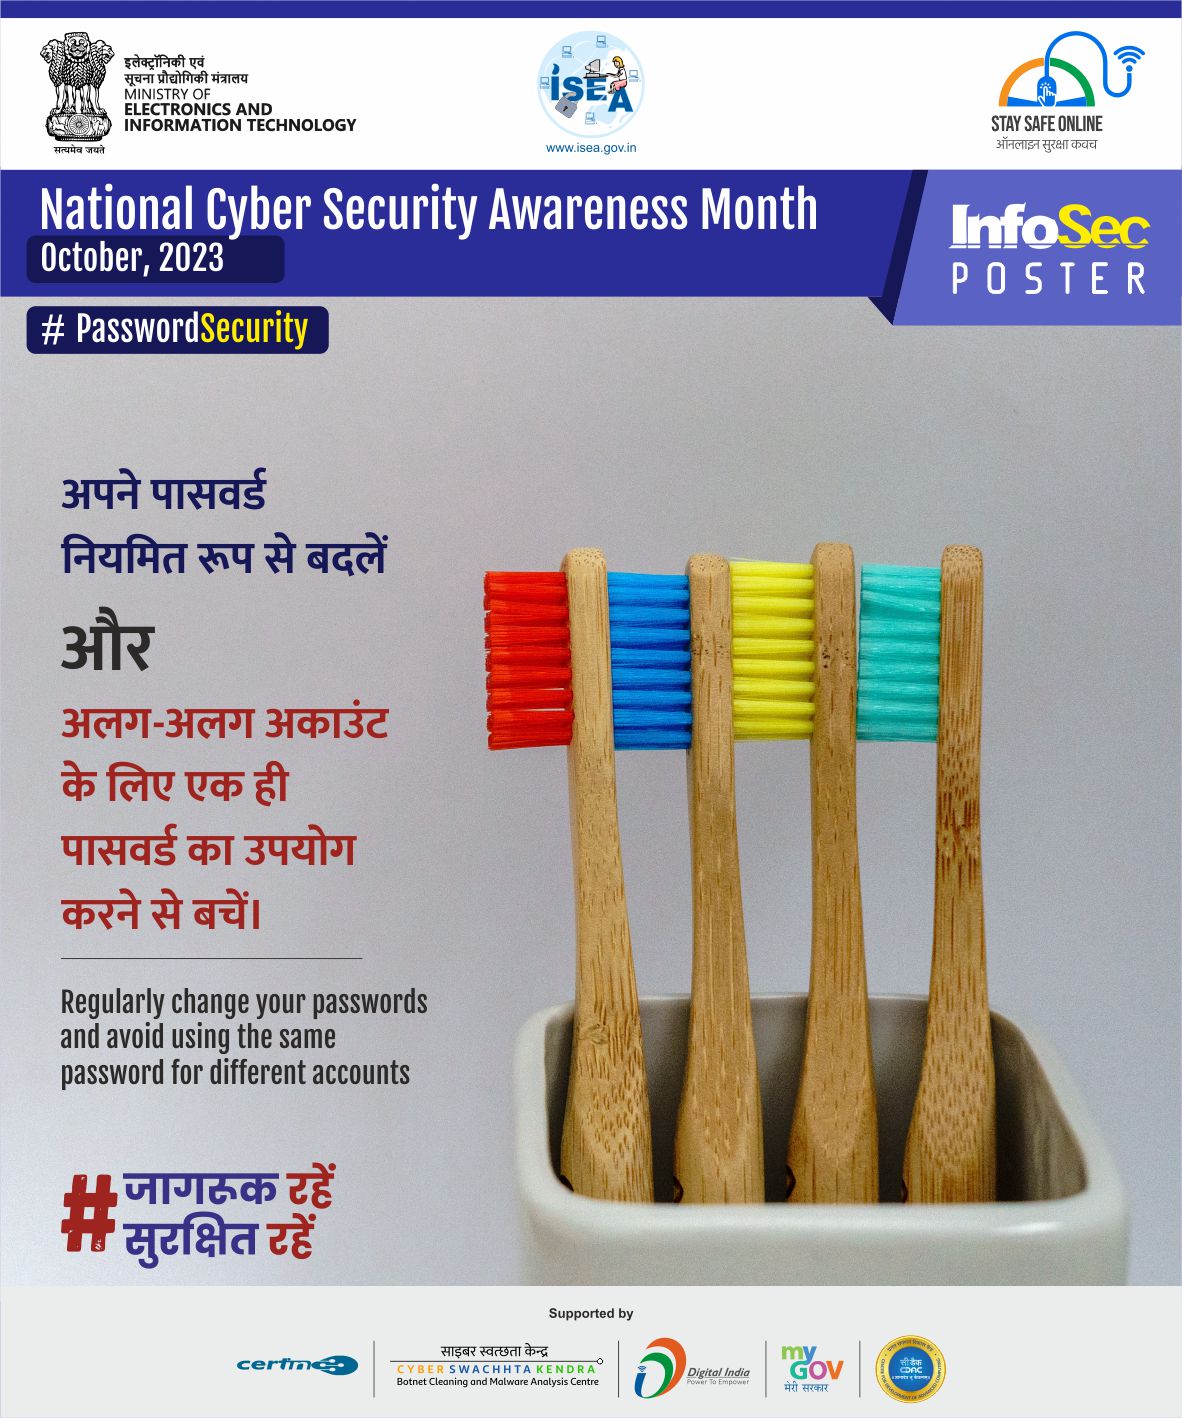 Password-security-Hindi-tmb.jpg